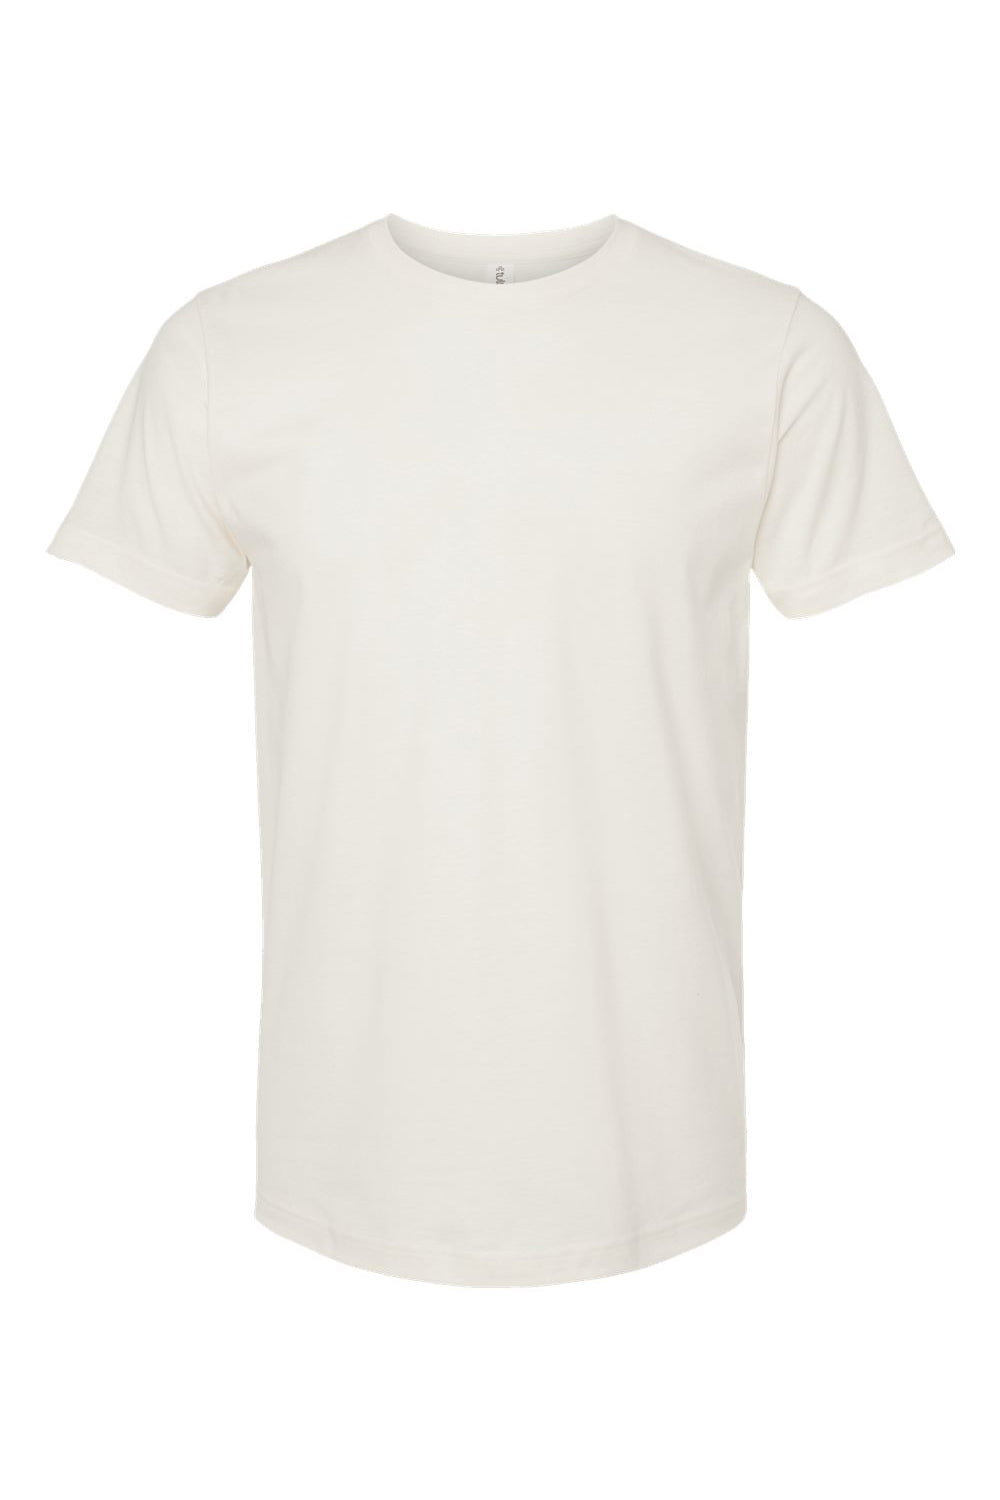 Tultex 202 Mens Fine Jersey Short Sleeve Crewneck T-Shirt Vintage White Flat Front